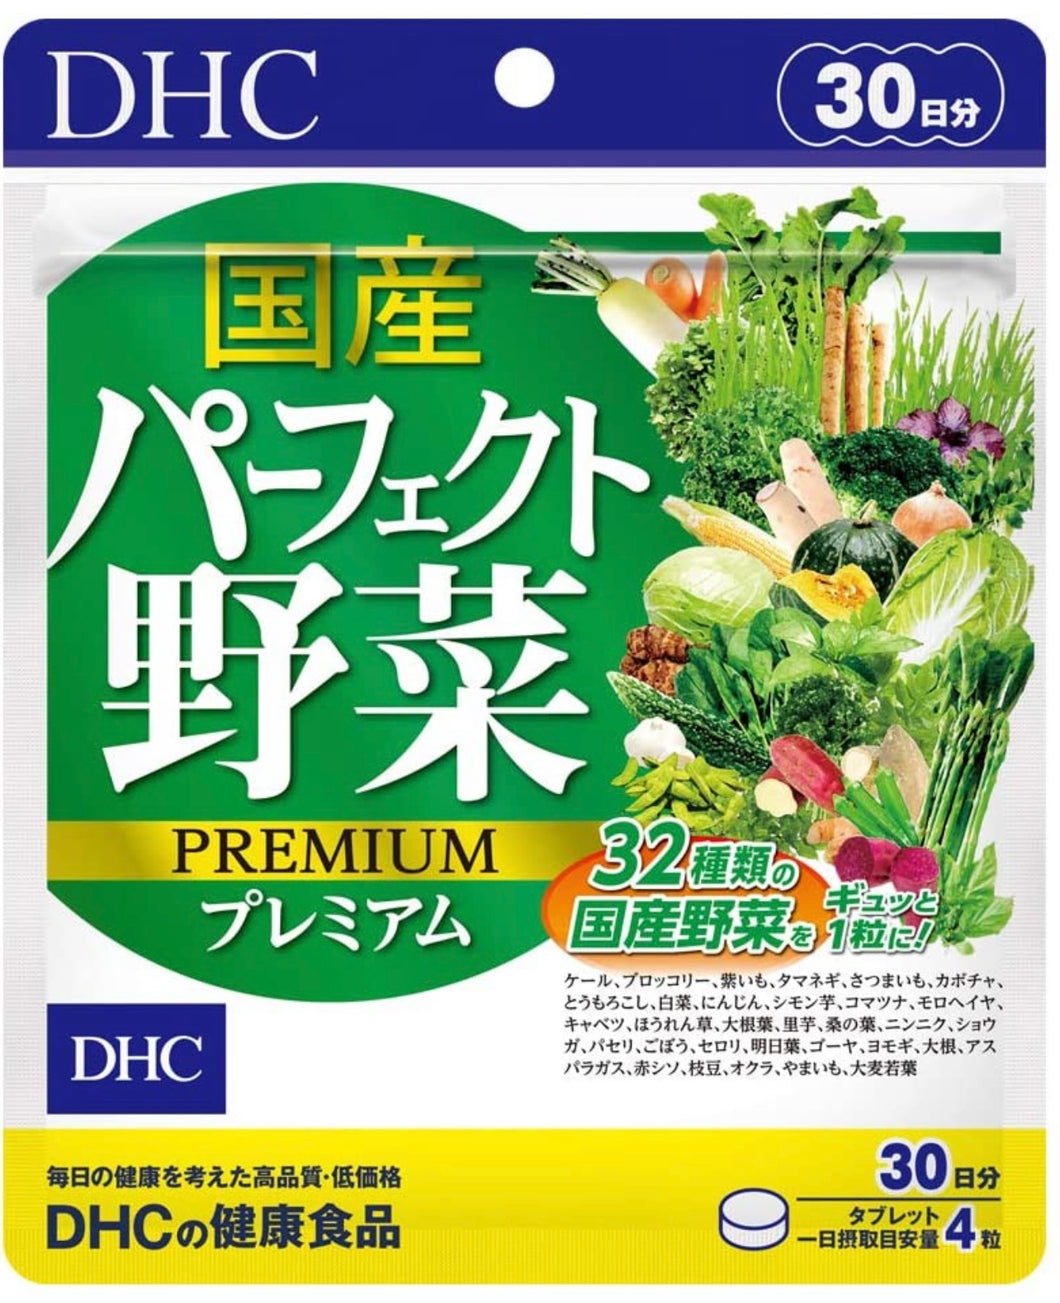 DHC Perfect Vegetables Premium Supplement 120 Tablets